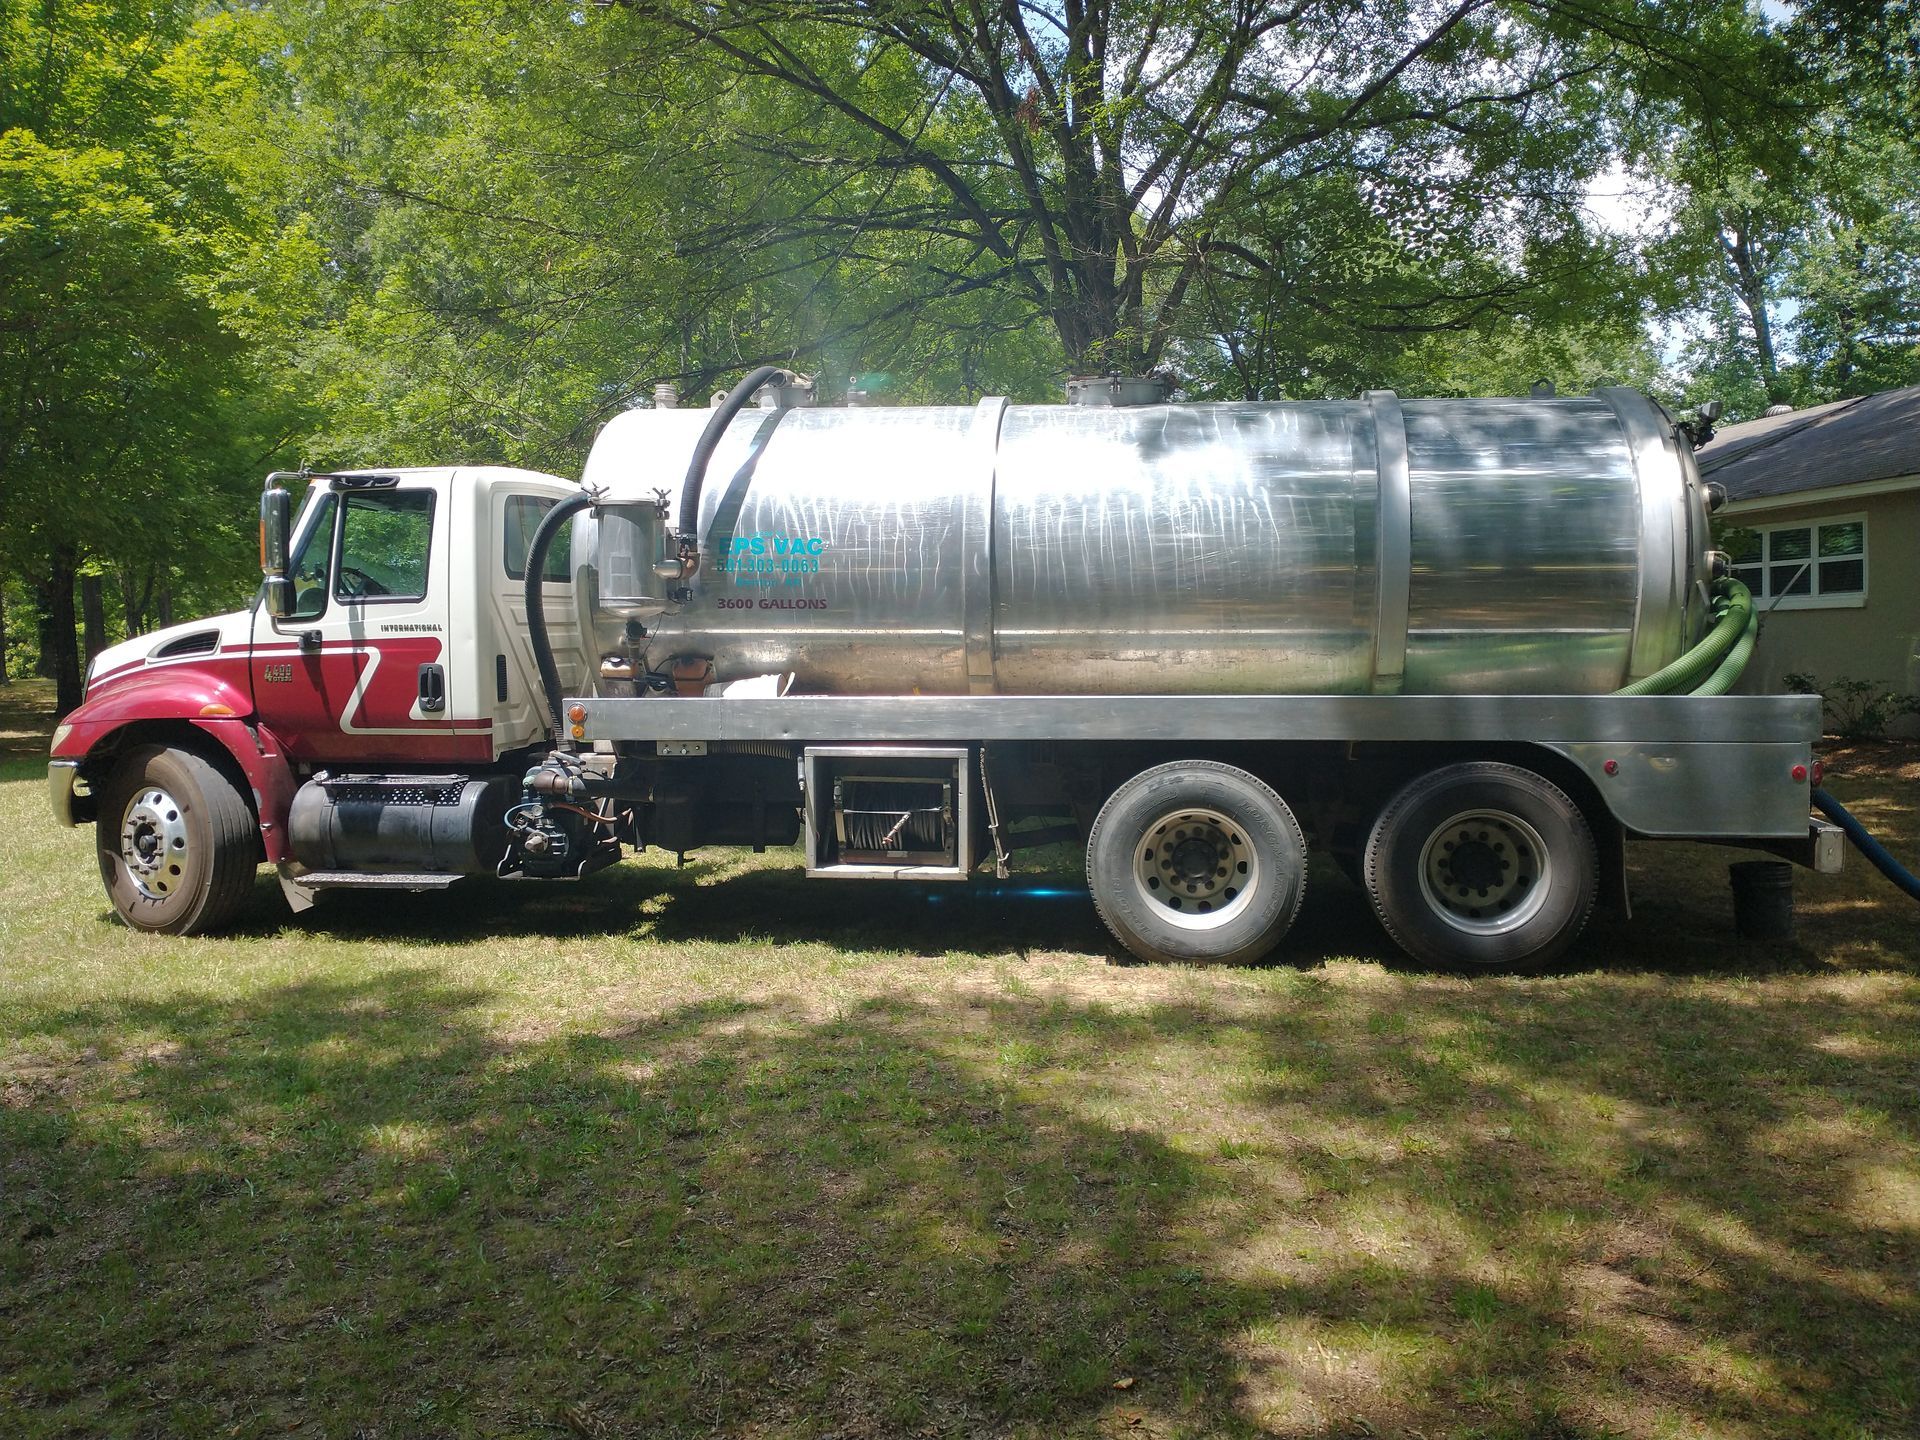 Septic Pumping Truck - Benton, AR - Emery Pump Service